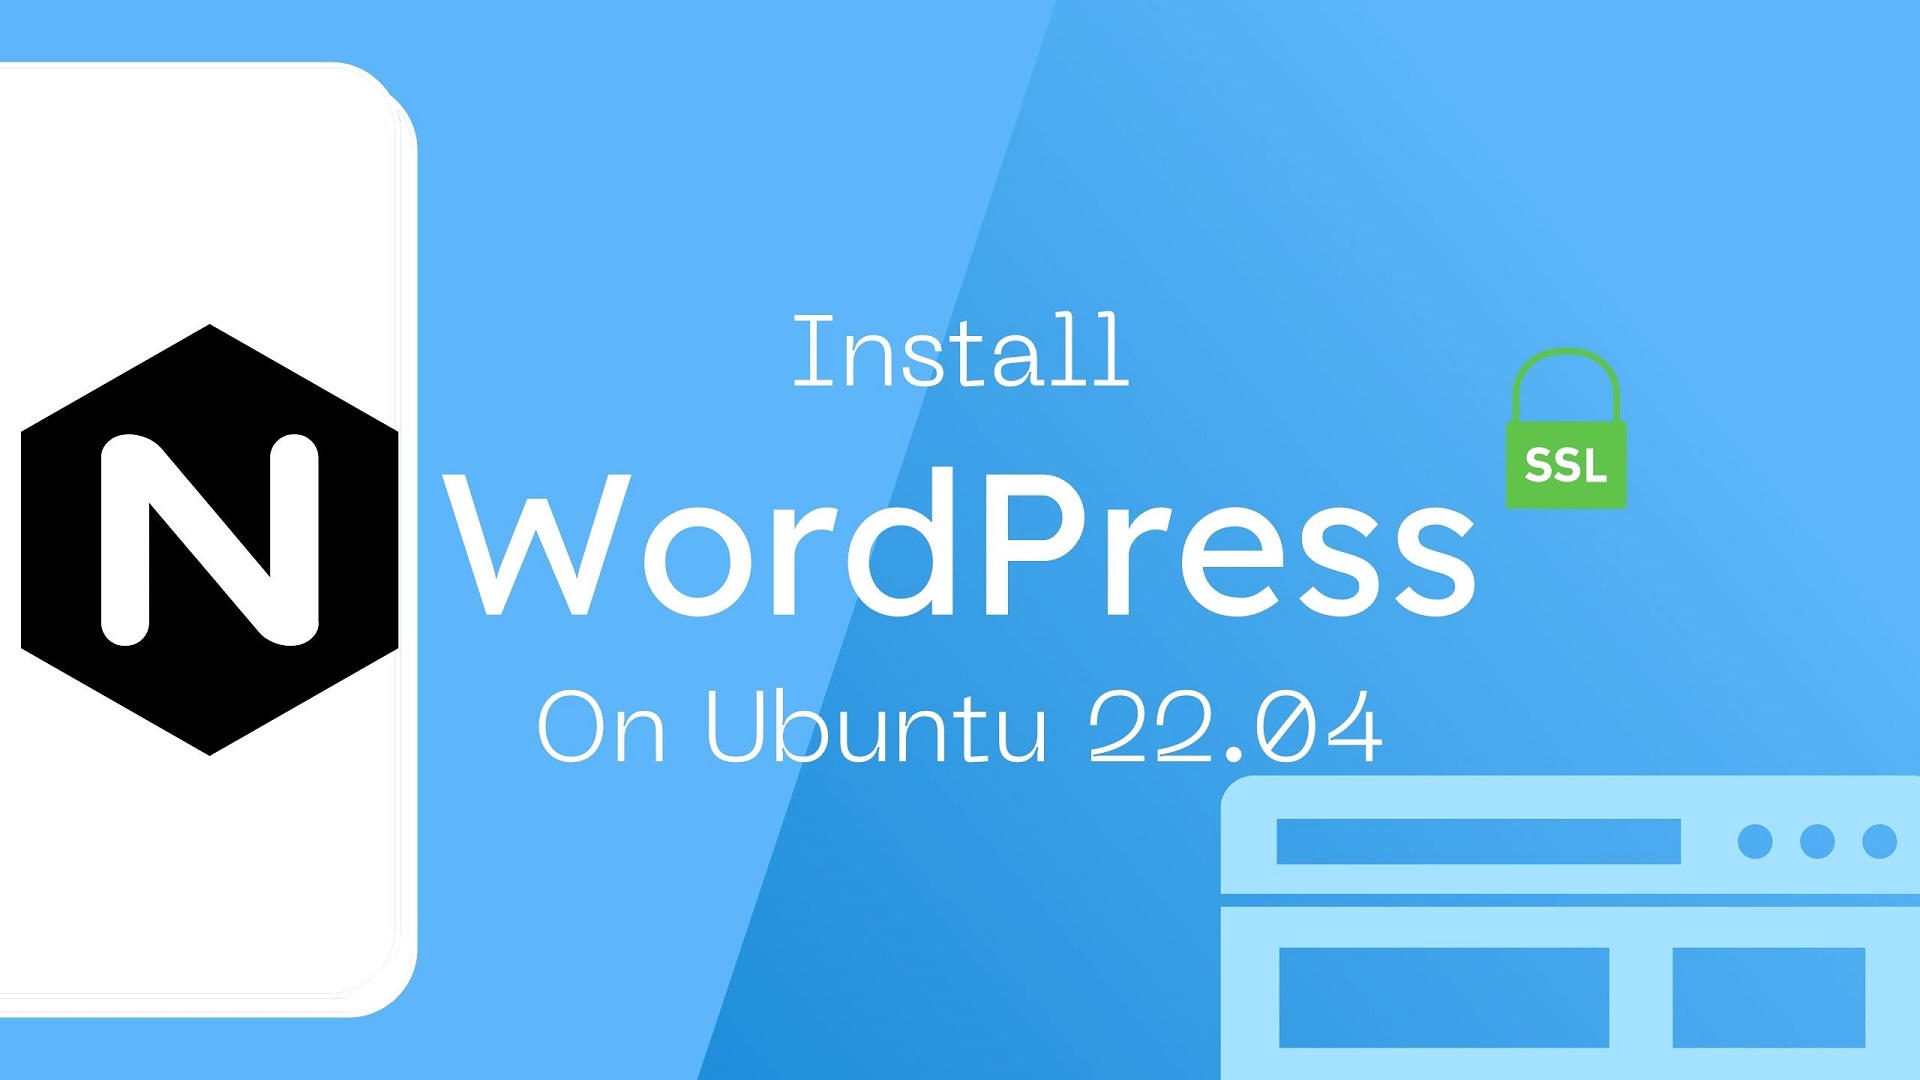 Install WordPress with Nginx and Let's Encrypt SSL on Ubuntu 22.04